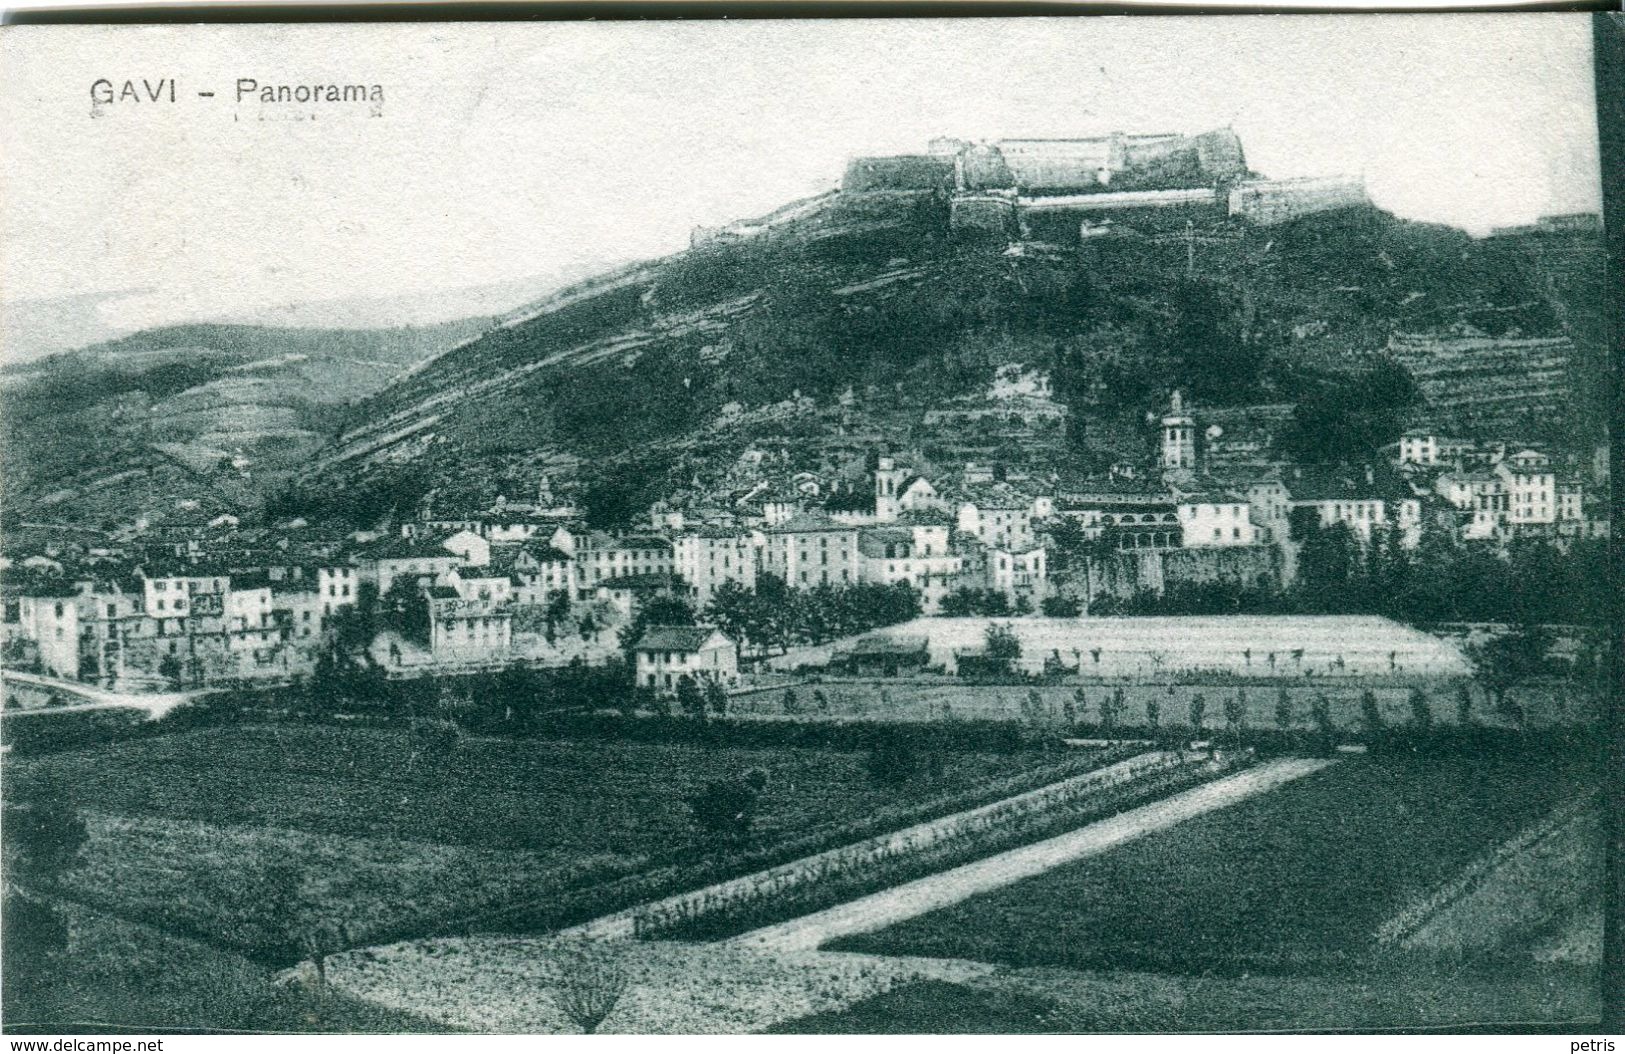 Gavi. Panorama, 1917 - Lot.1304 - Alessandria